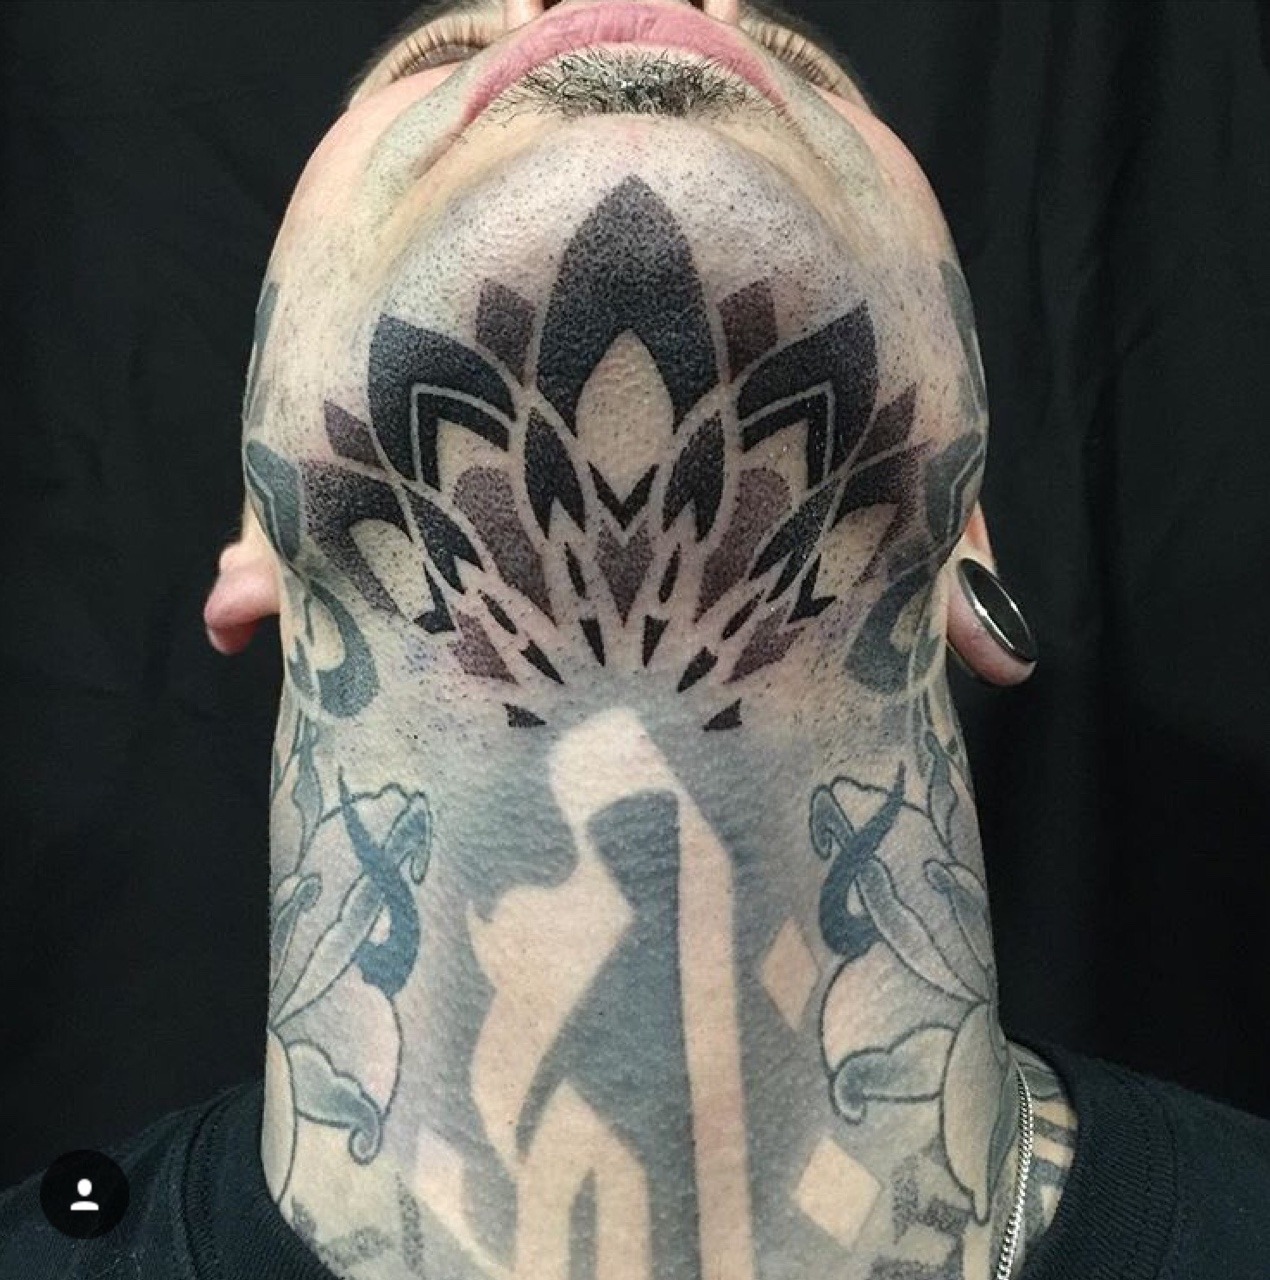 Under chin tattoo for dashft tattoo